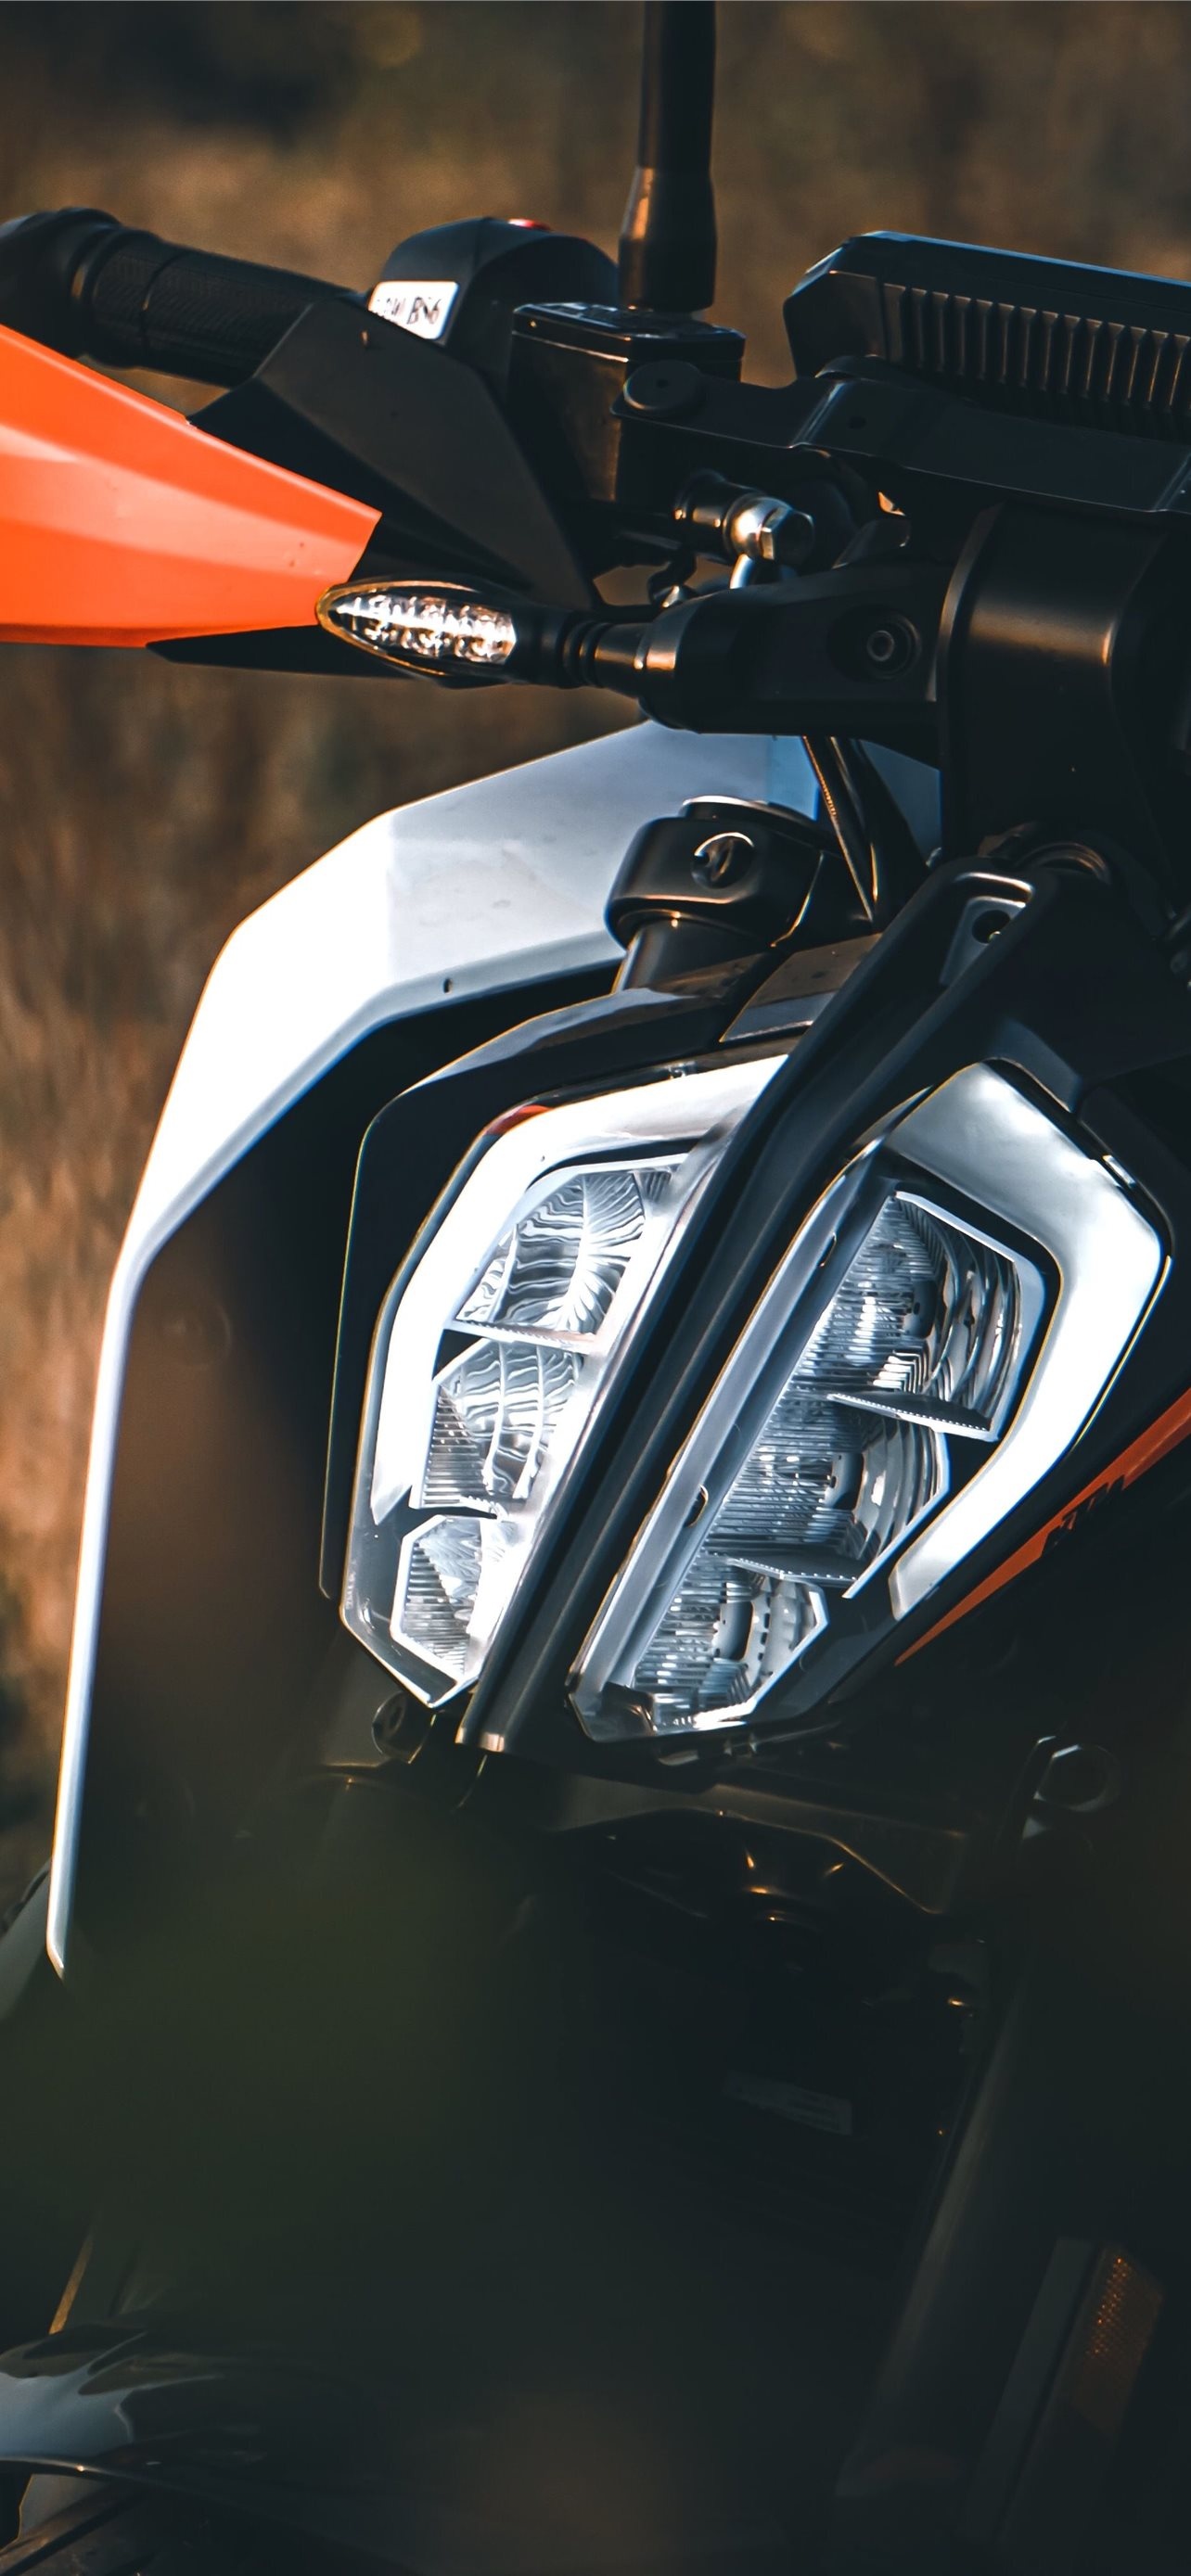 KTM Duke Bike, Latest iPhone HD Wallpapers, Cutting-edge Design, Iconic Motorcycle, 1290x2780 HD Handy